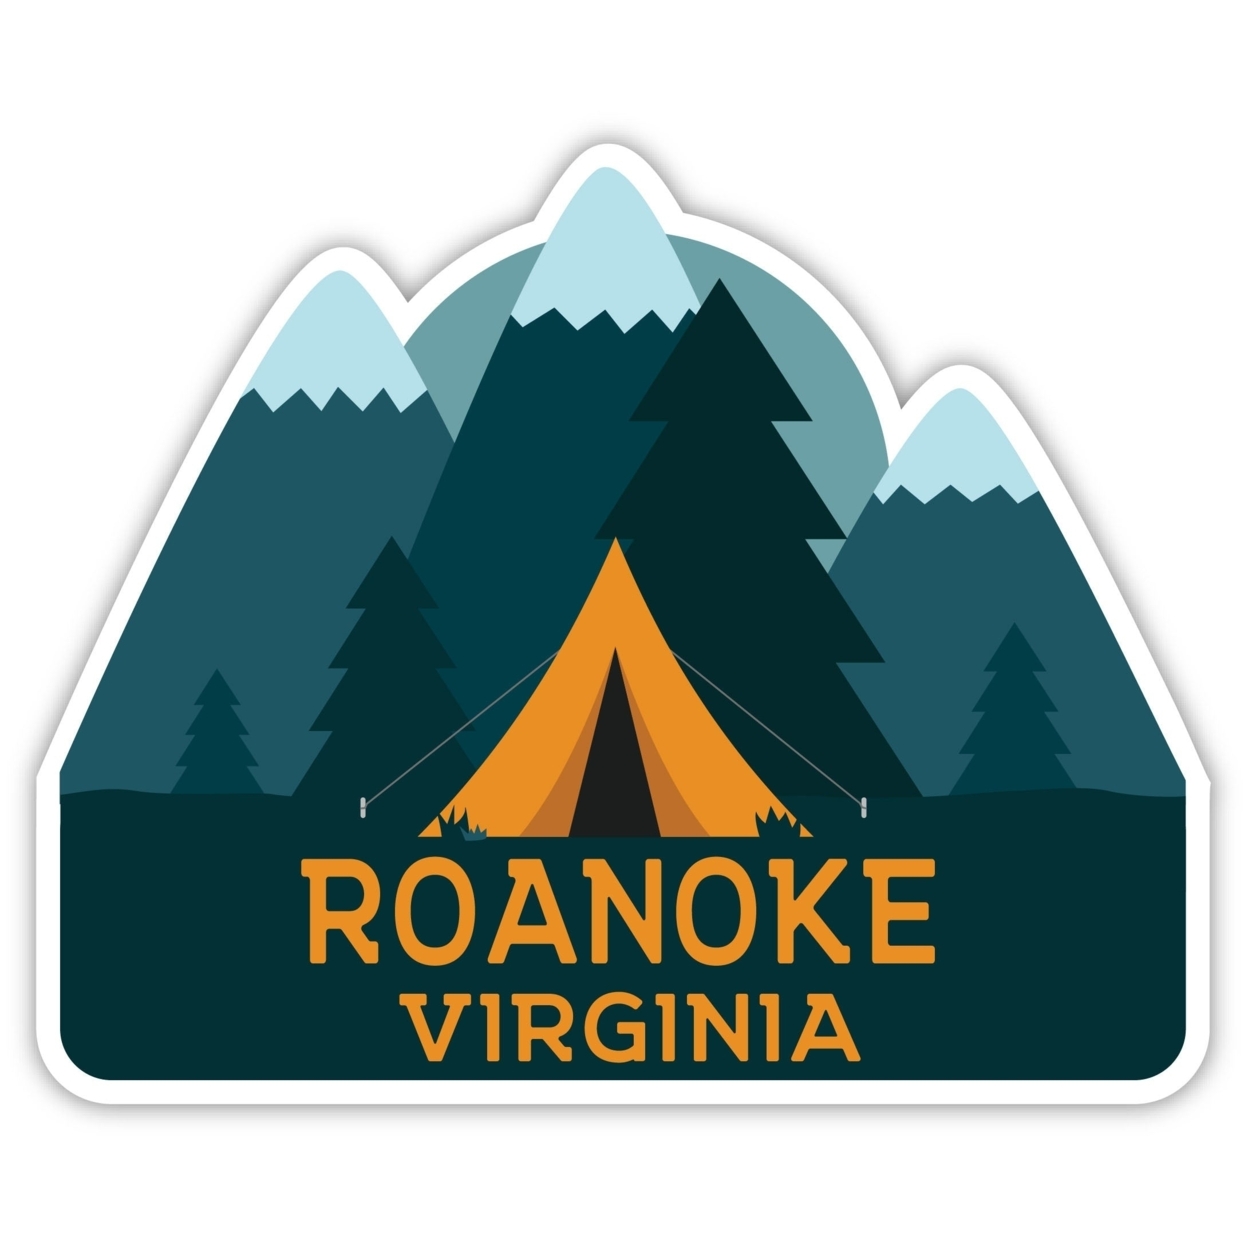 Roanoke Virginia Souvenir Decorative Stickers (Choose Theme And Size) - Single Unit, 2-Inch, Camp Life